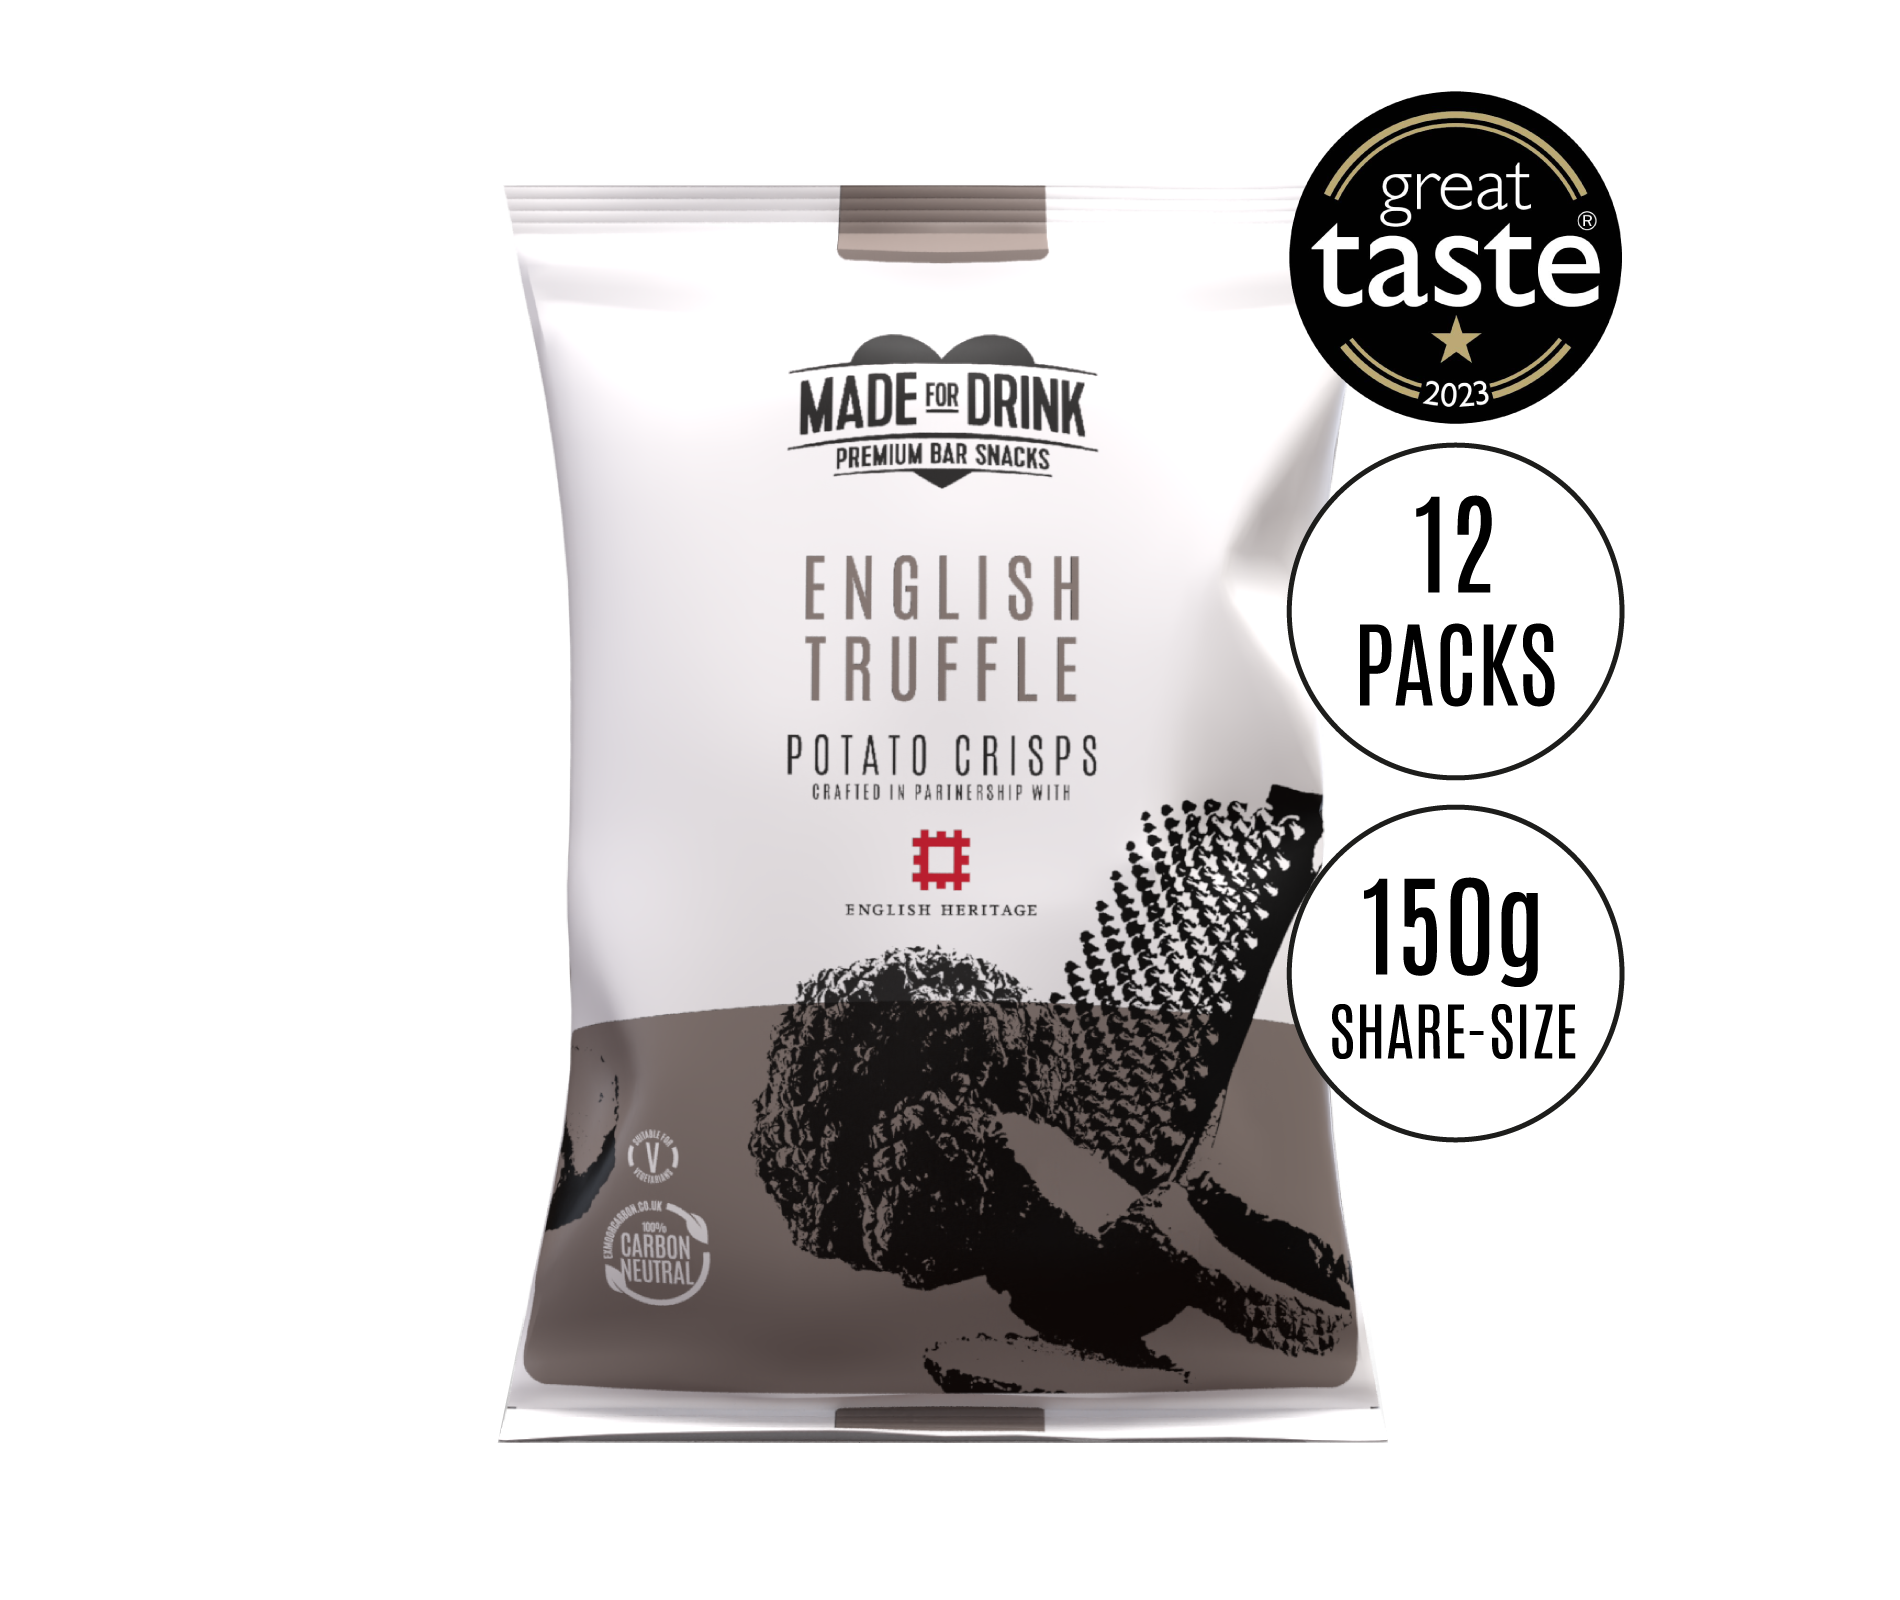 150g pack of Made For Drink's award-winning English Truffle flavoured English Heritage potato crisps. Great Taste Awards 2023 one star logo. 12 packs per case.